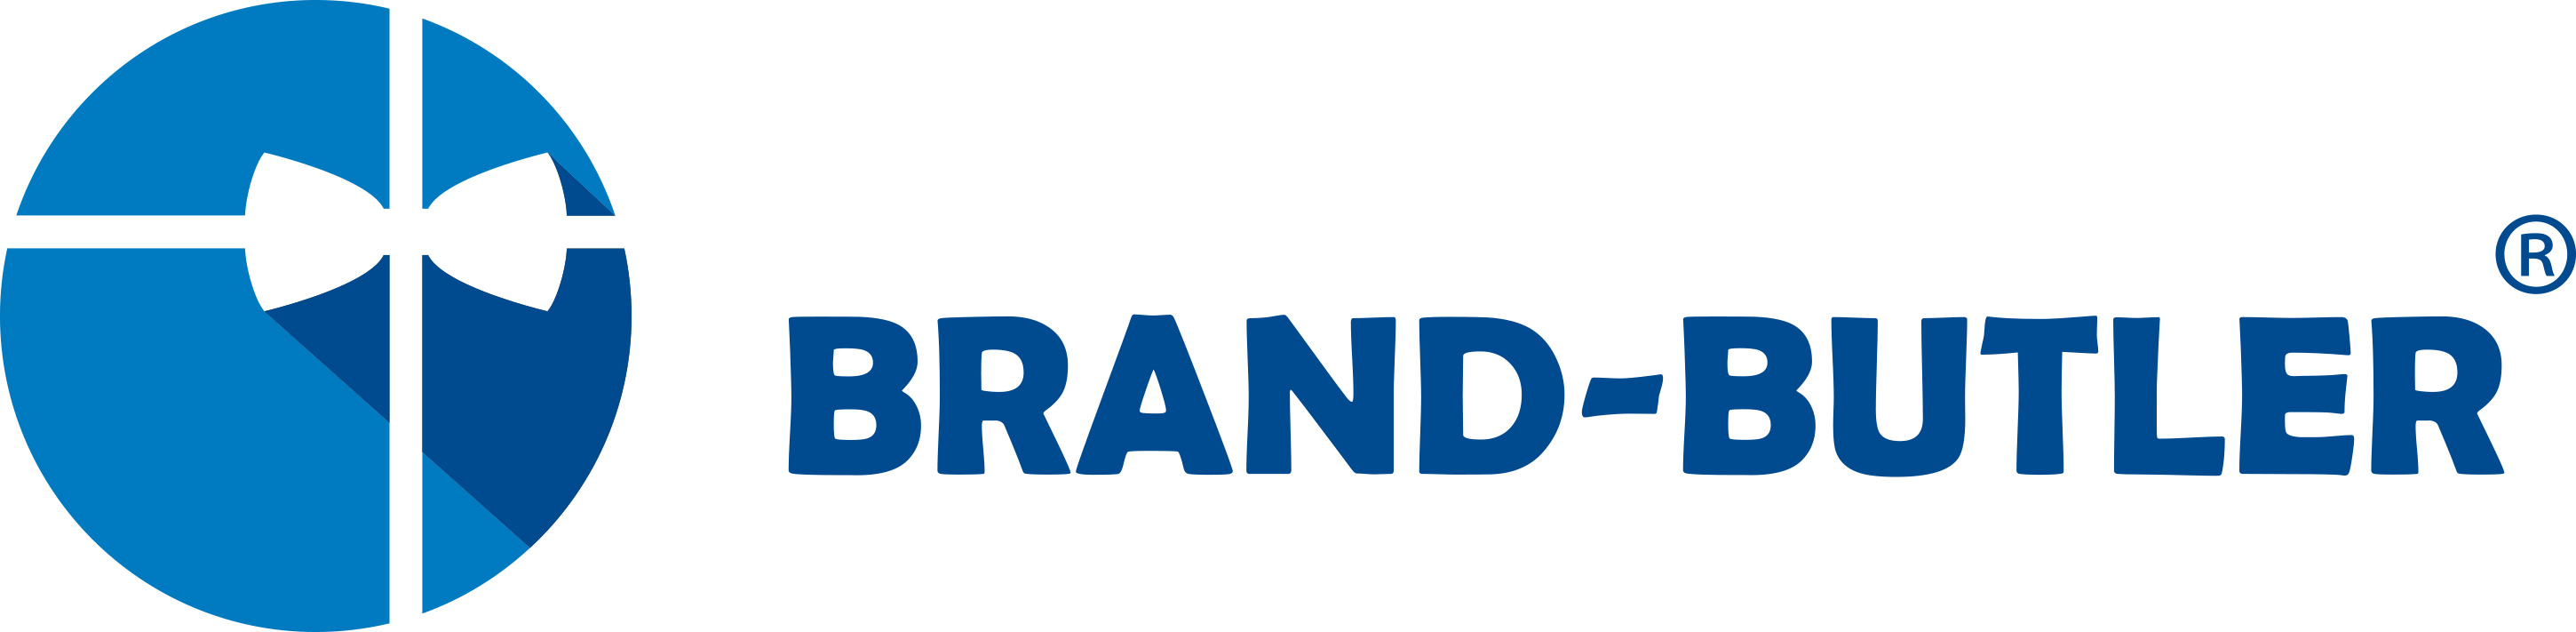 Brand-Butler B.V. - Company logo